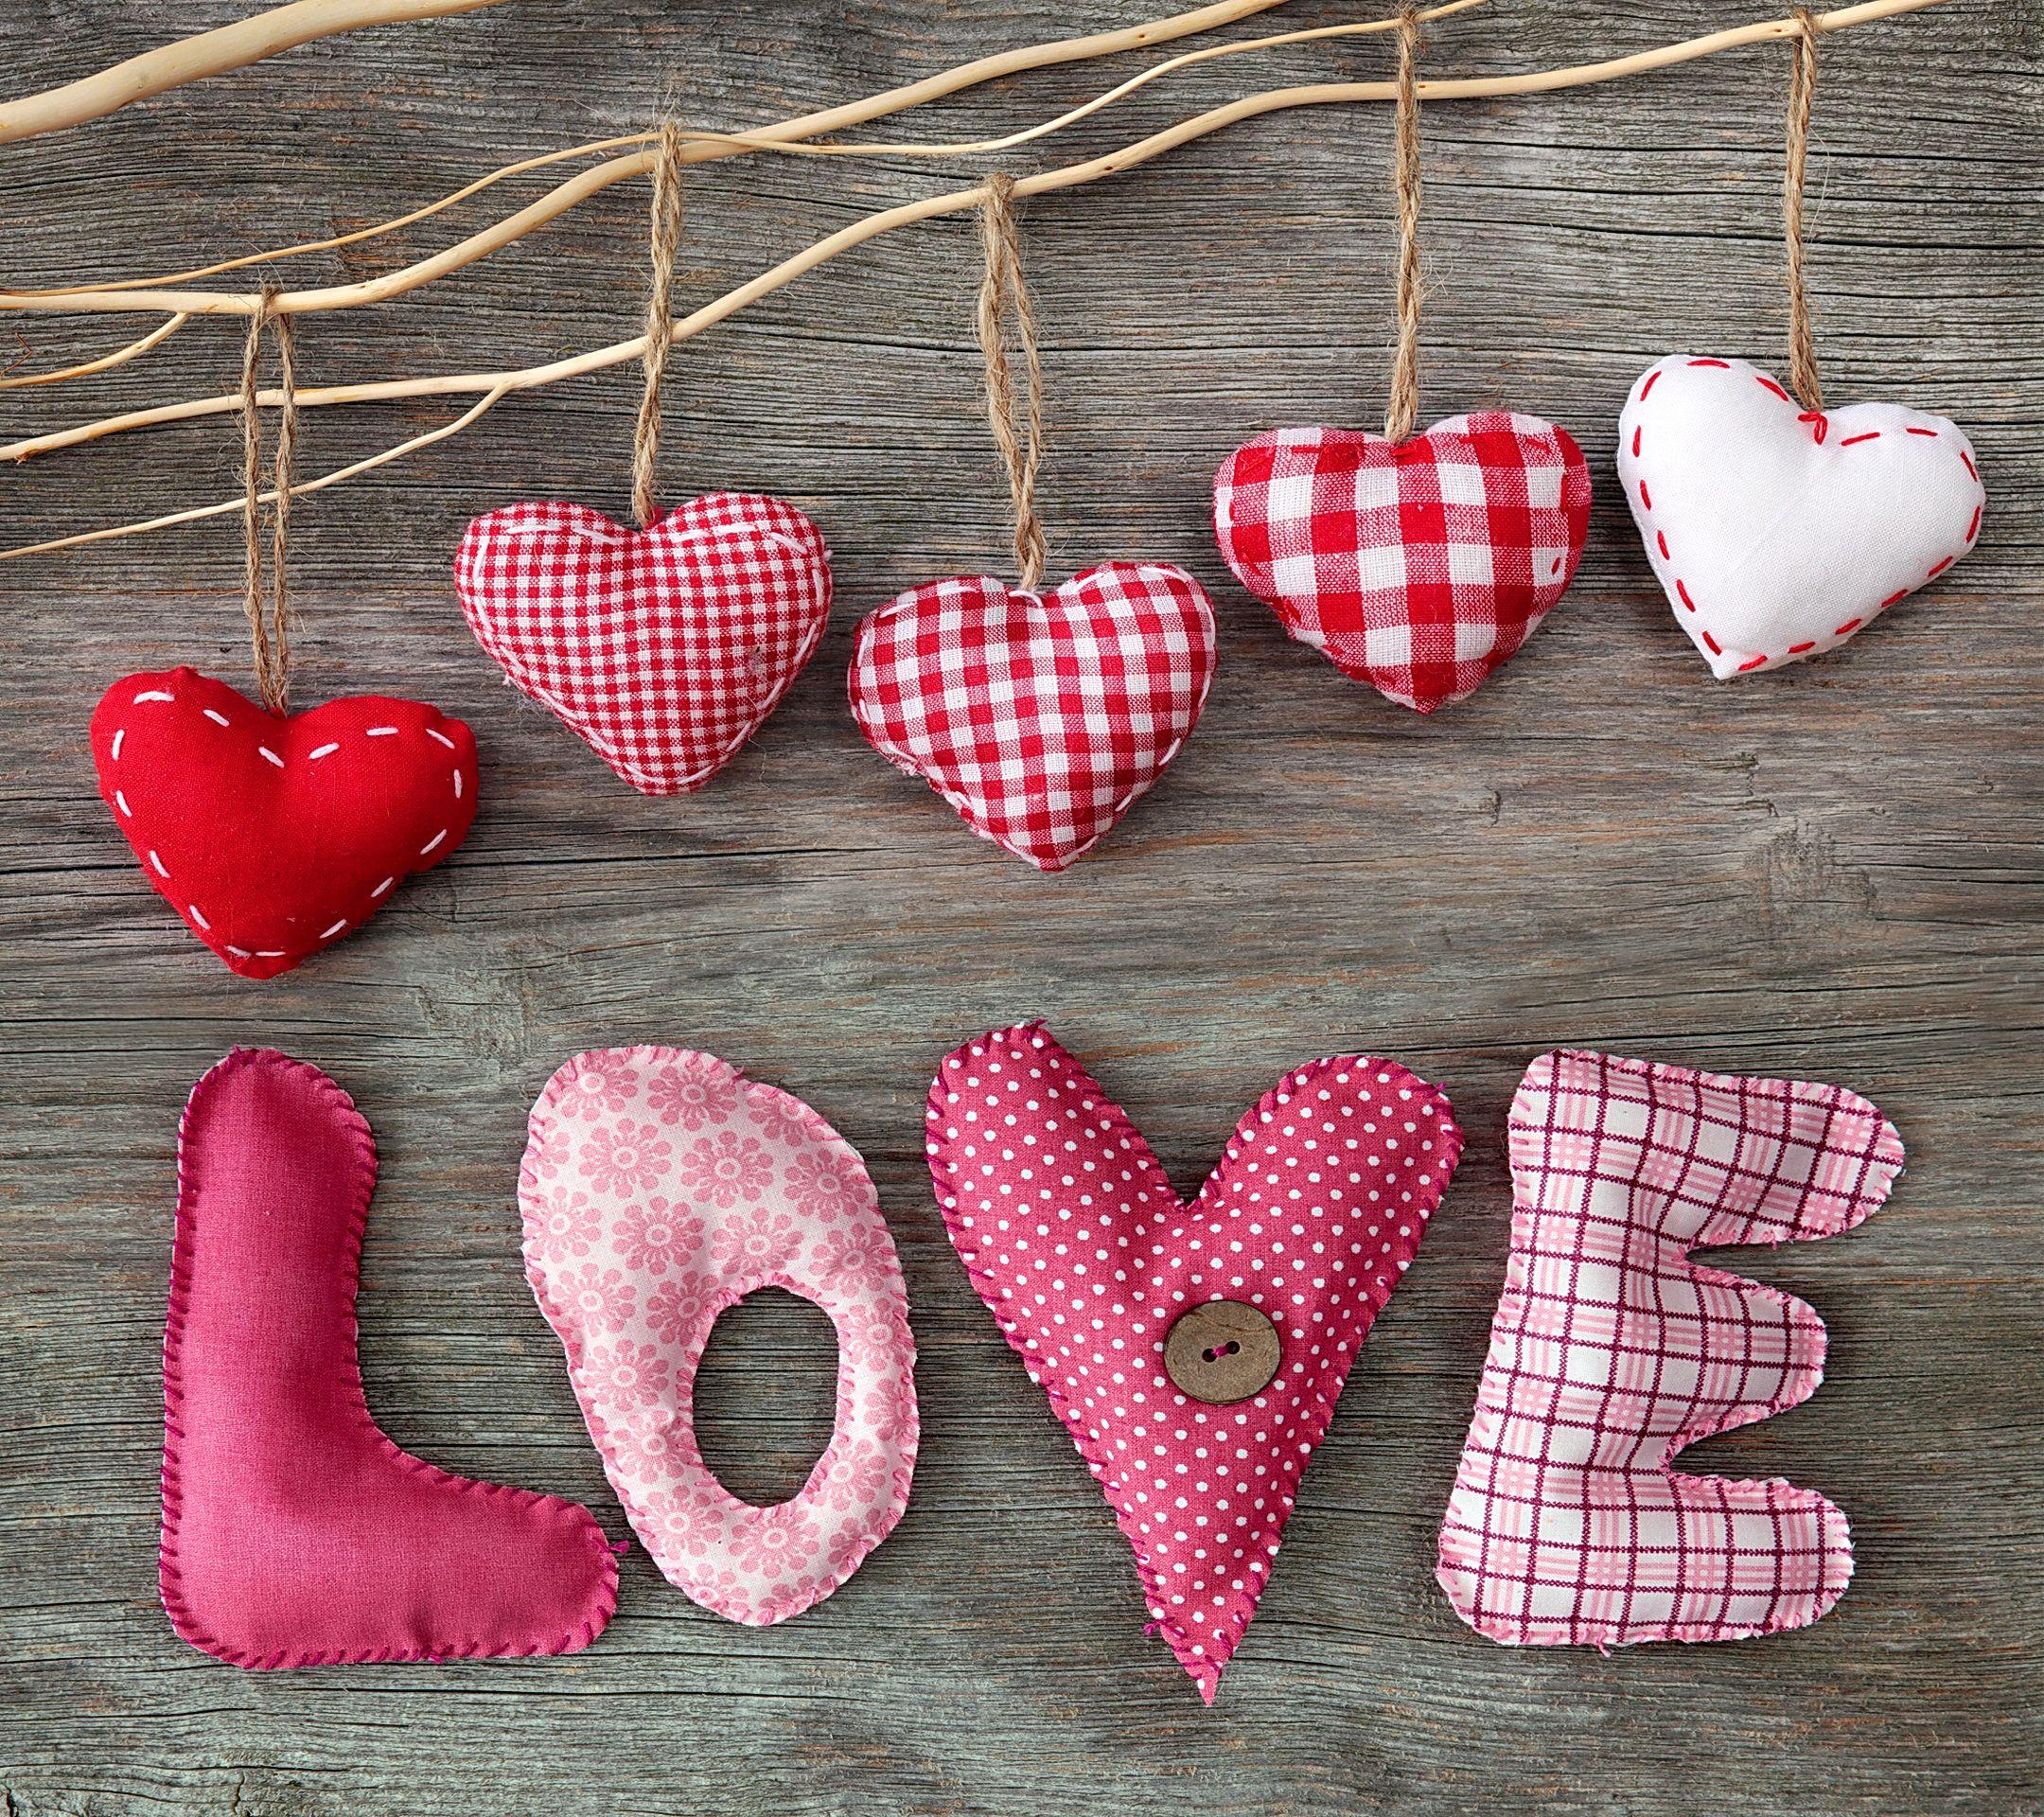 Love Heart Wallpapers Top Free Love Heart Backgrounds Wallpaperaccess